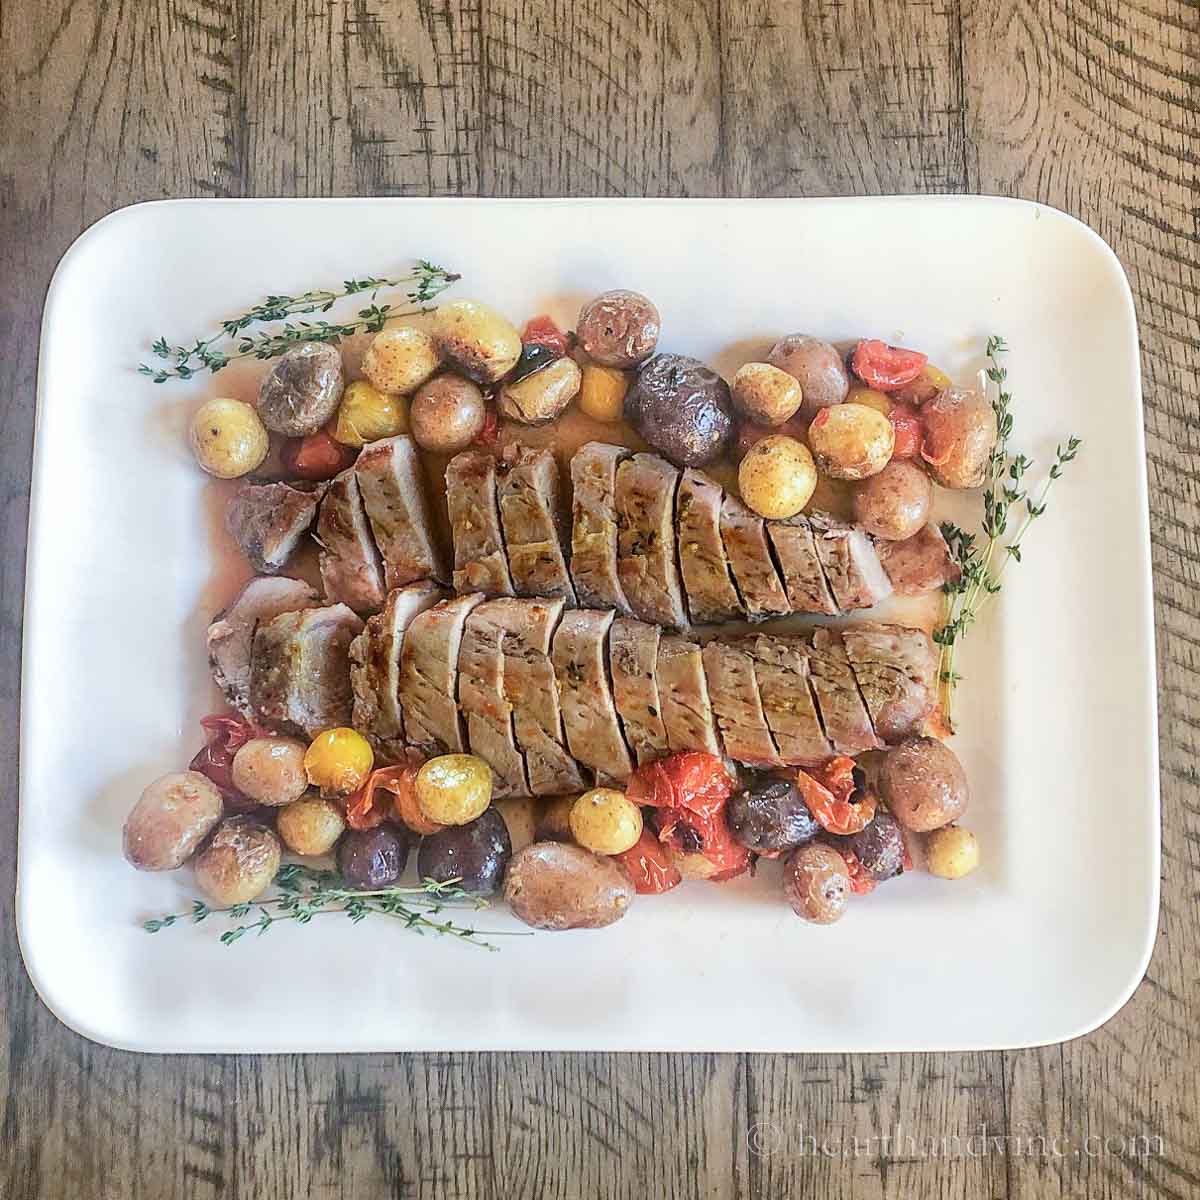 Platter of pork tenderloin dinner with potatoes and tomatoes on a serving platter.